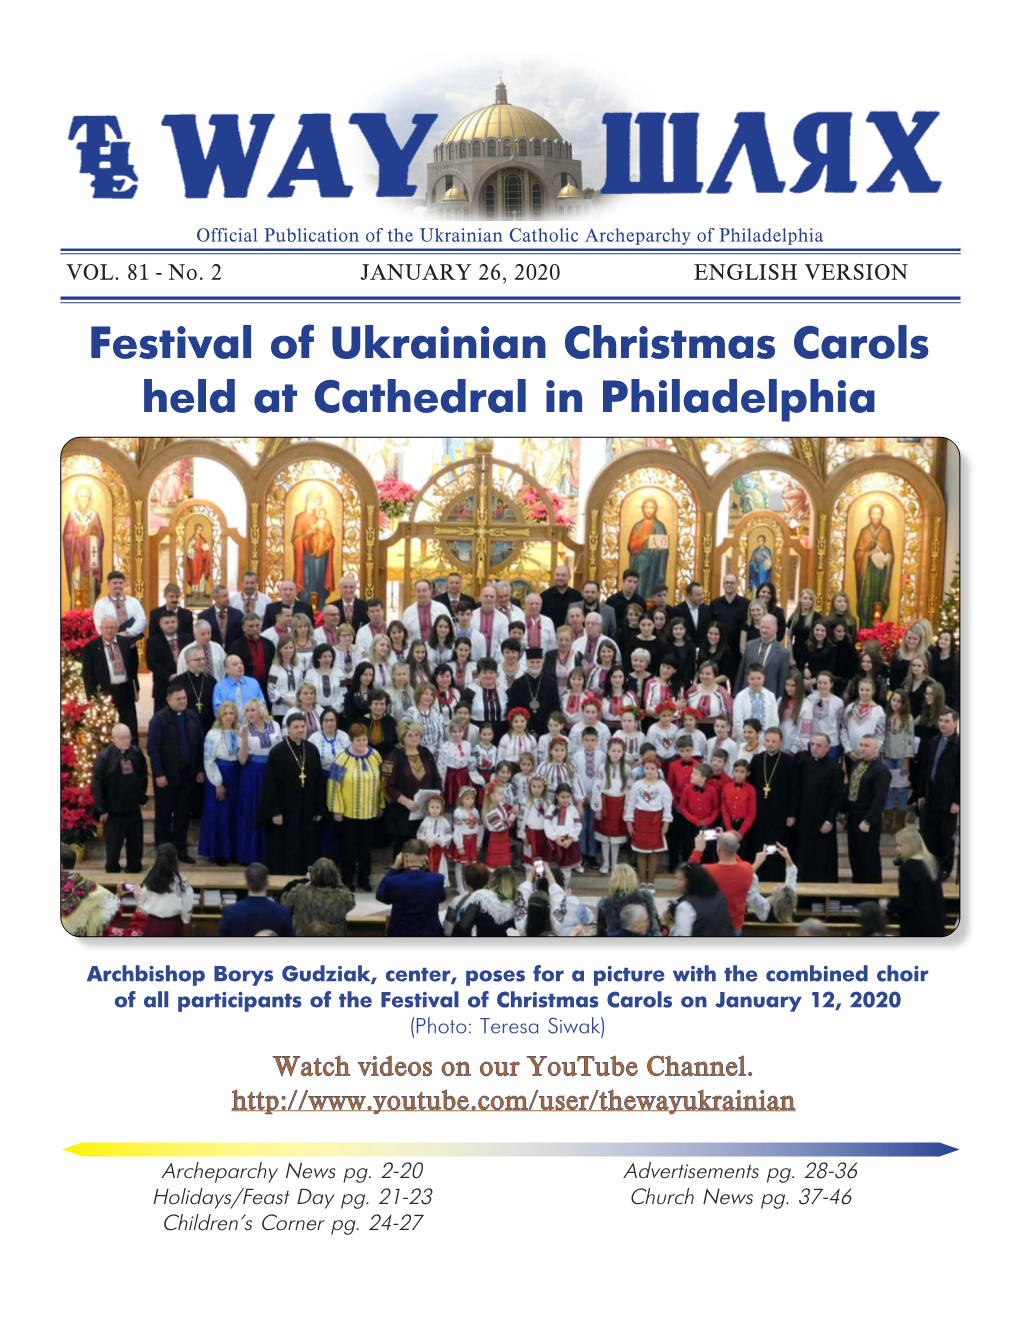 Festival of Ukrainian Christmas Carols Held at Cathedral in Philadelphia